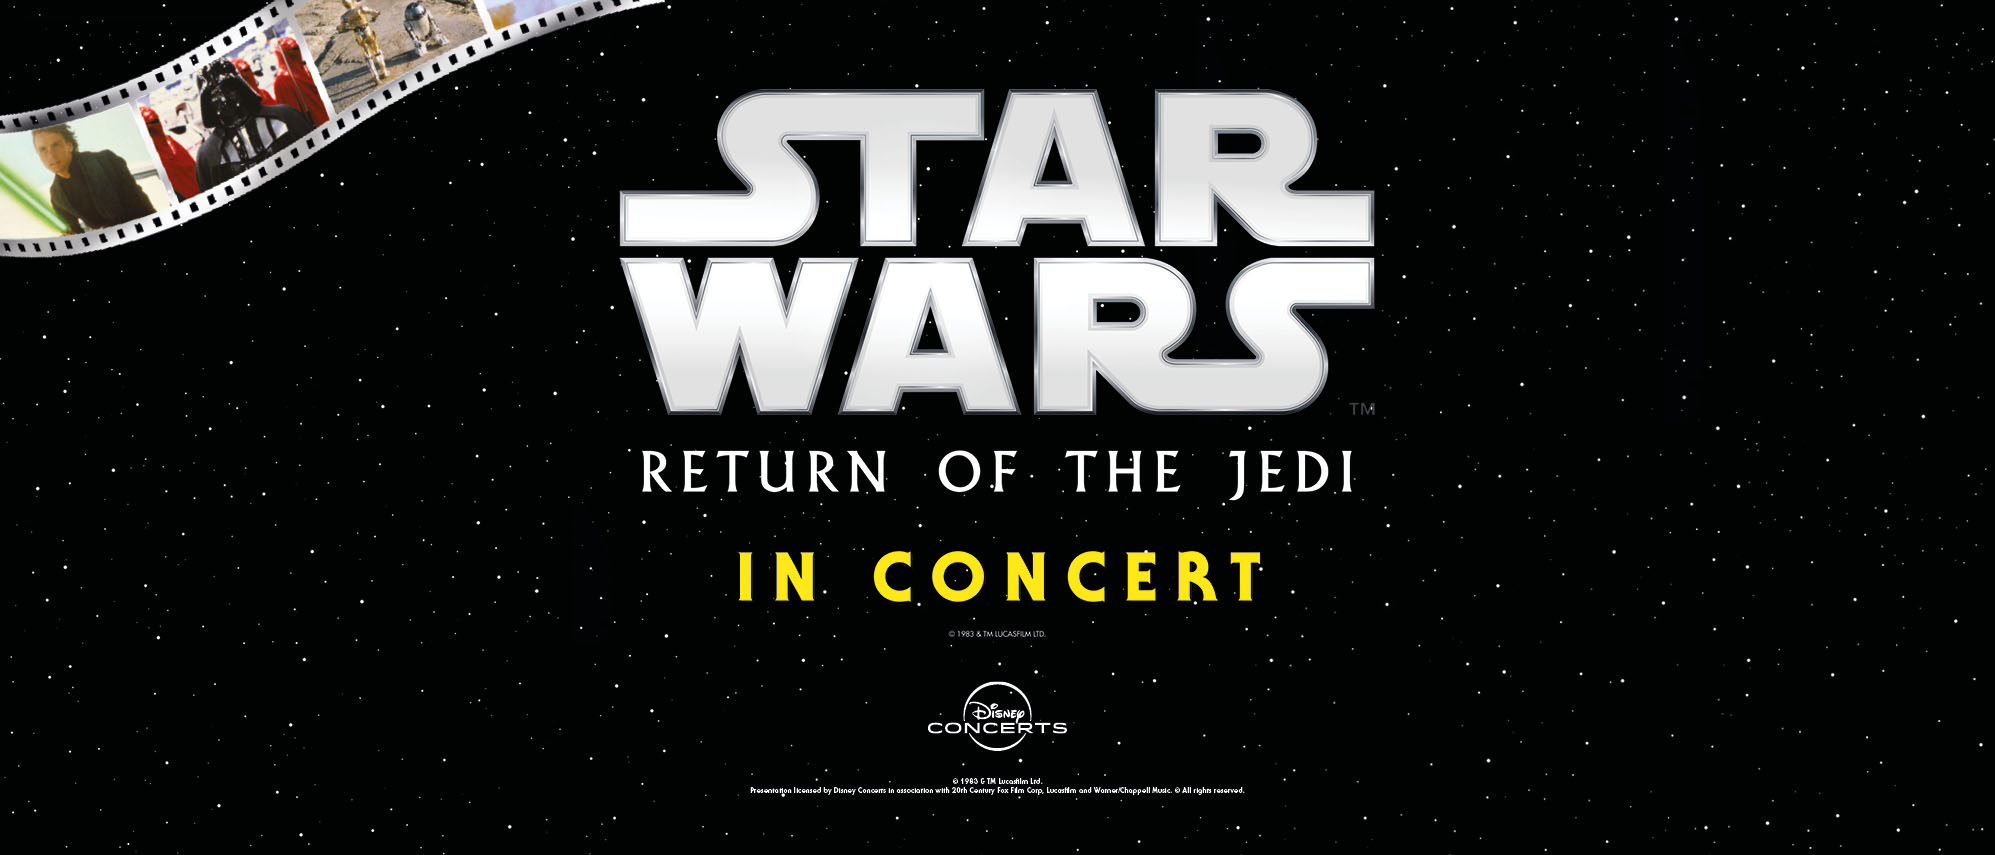 Star Wars: Return of the Jedi in Concert.